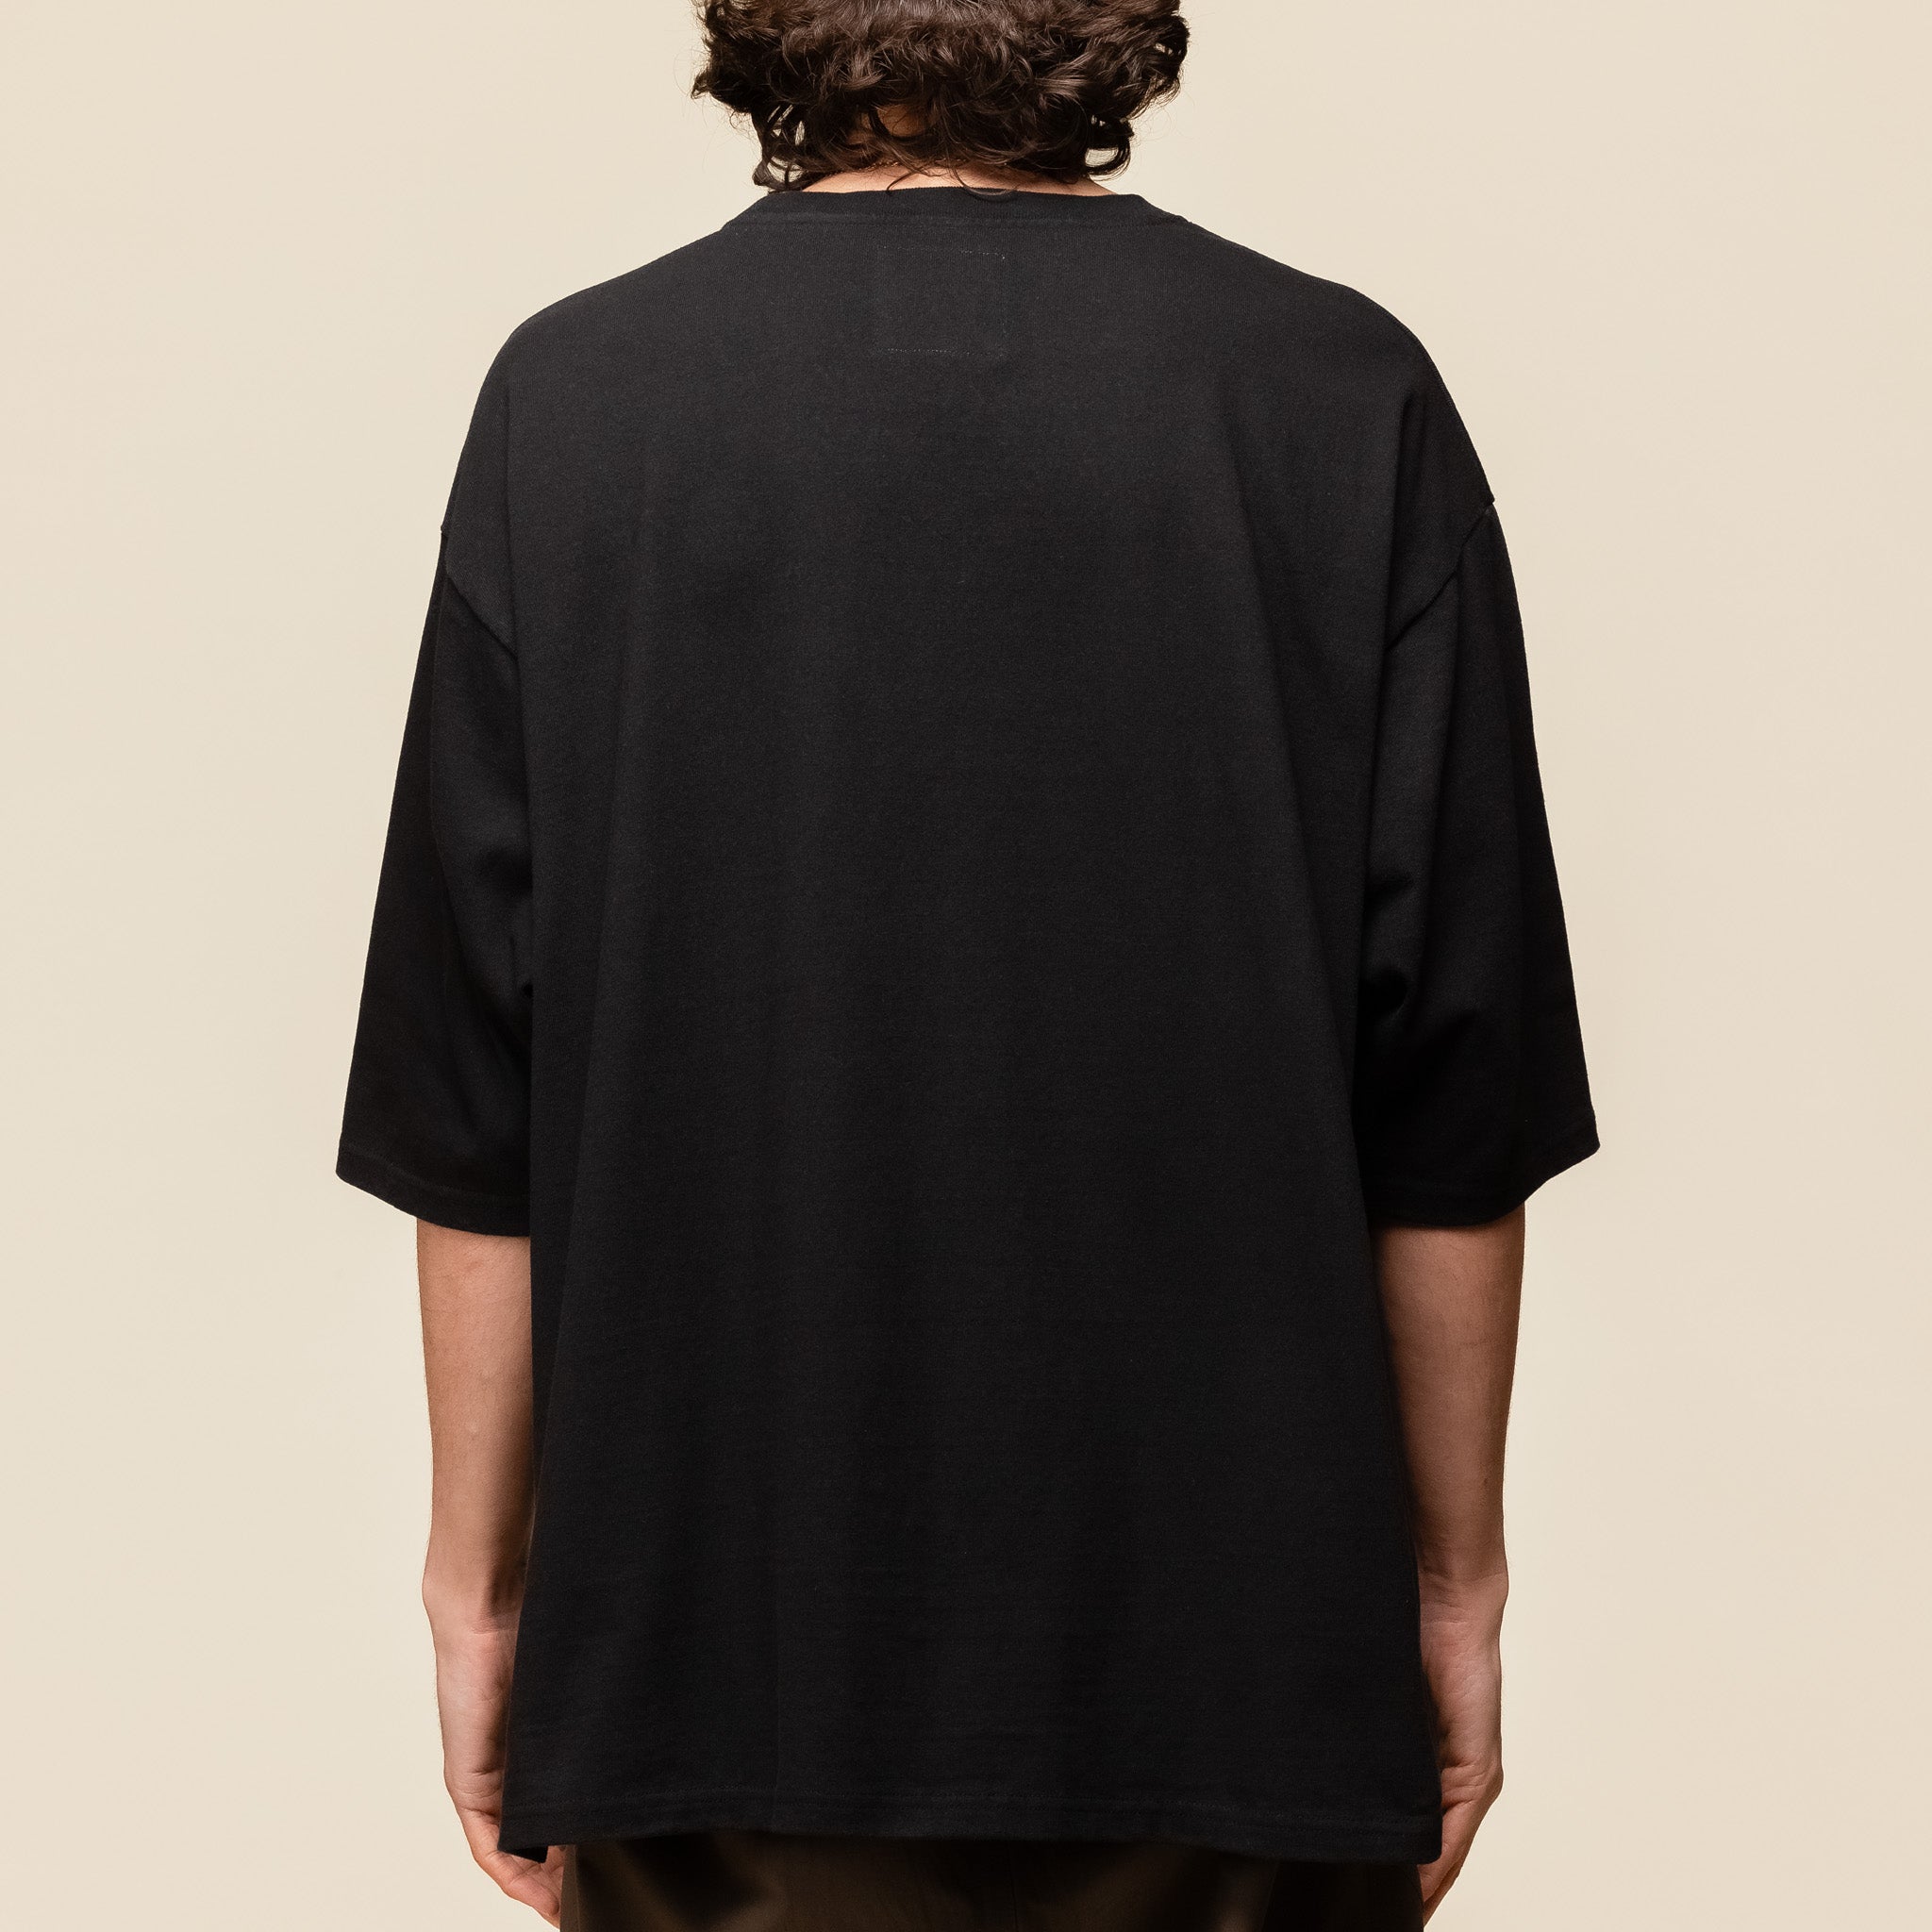 CMF Comfy Outdoor Garment - Heavy Cotton T-Shirt - Black